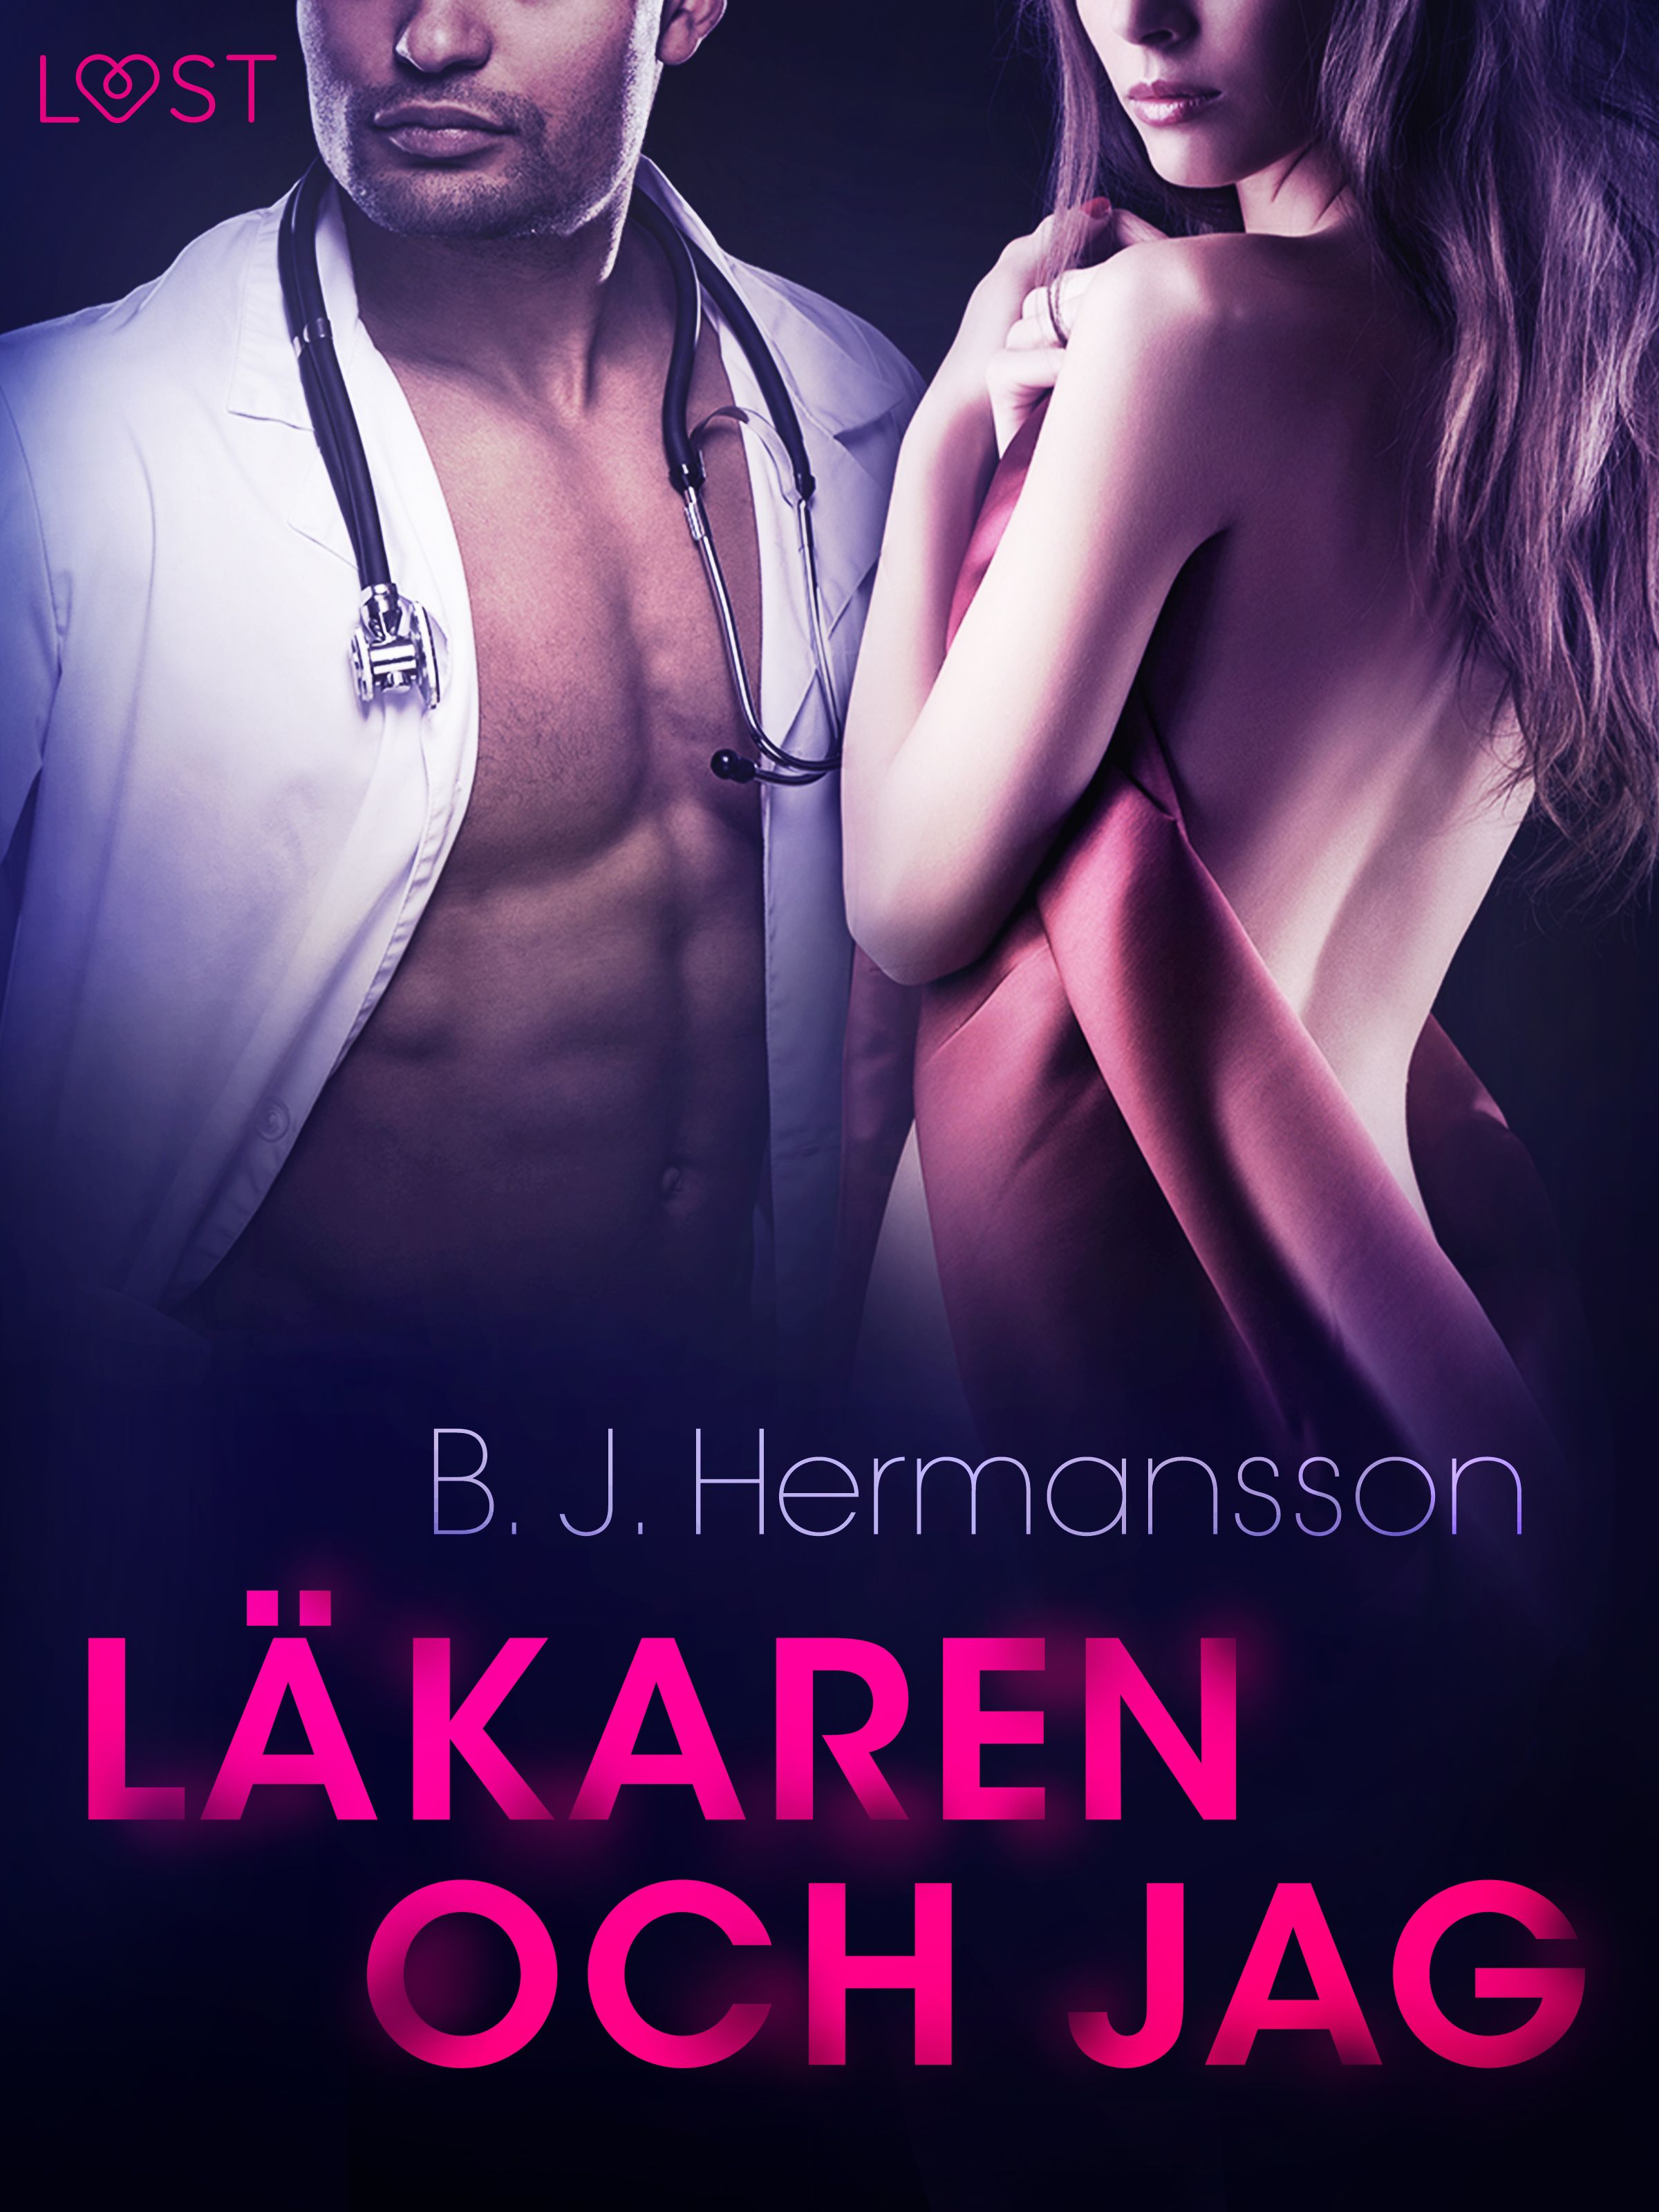 Läkaren och jag - erotisk novell, e-bok av B. J. Hermansson